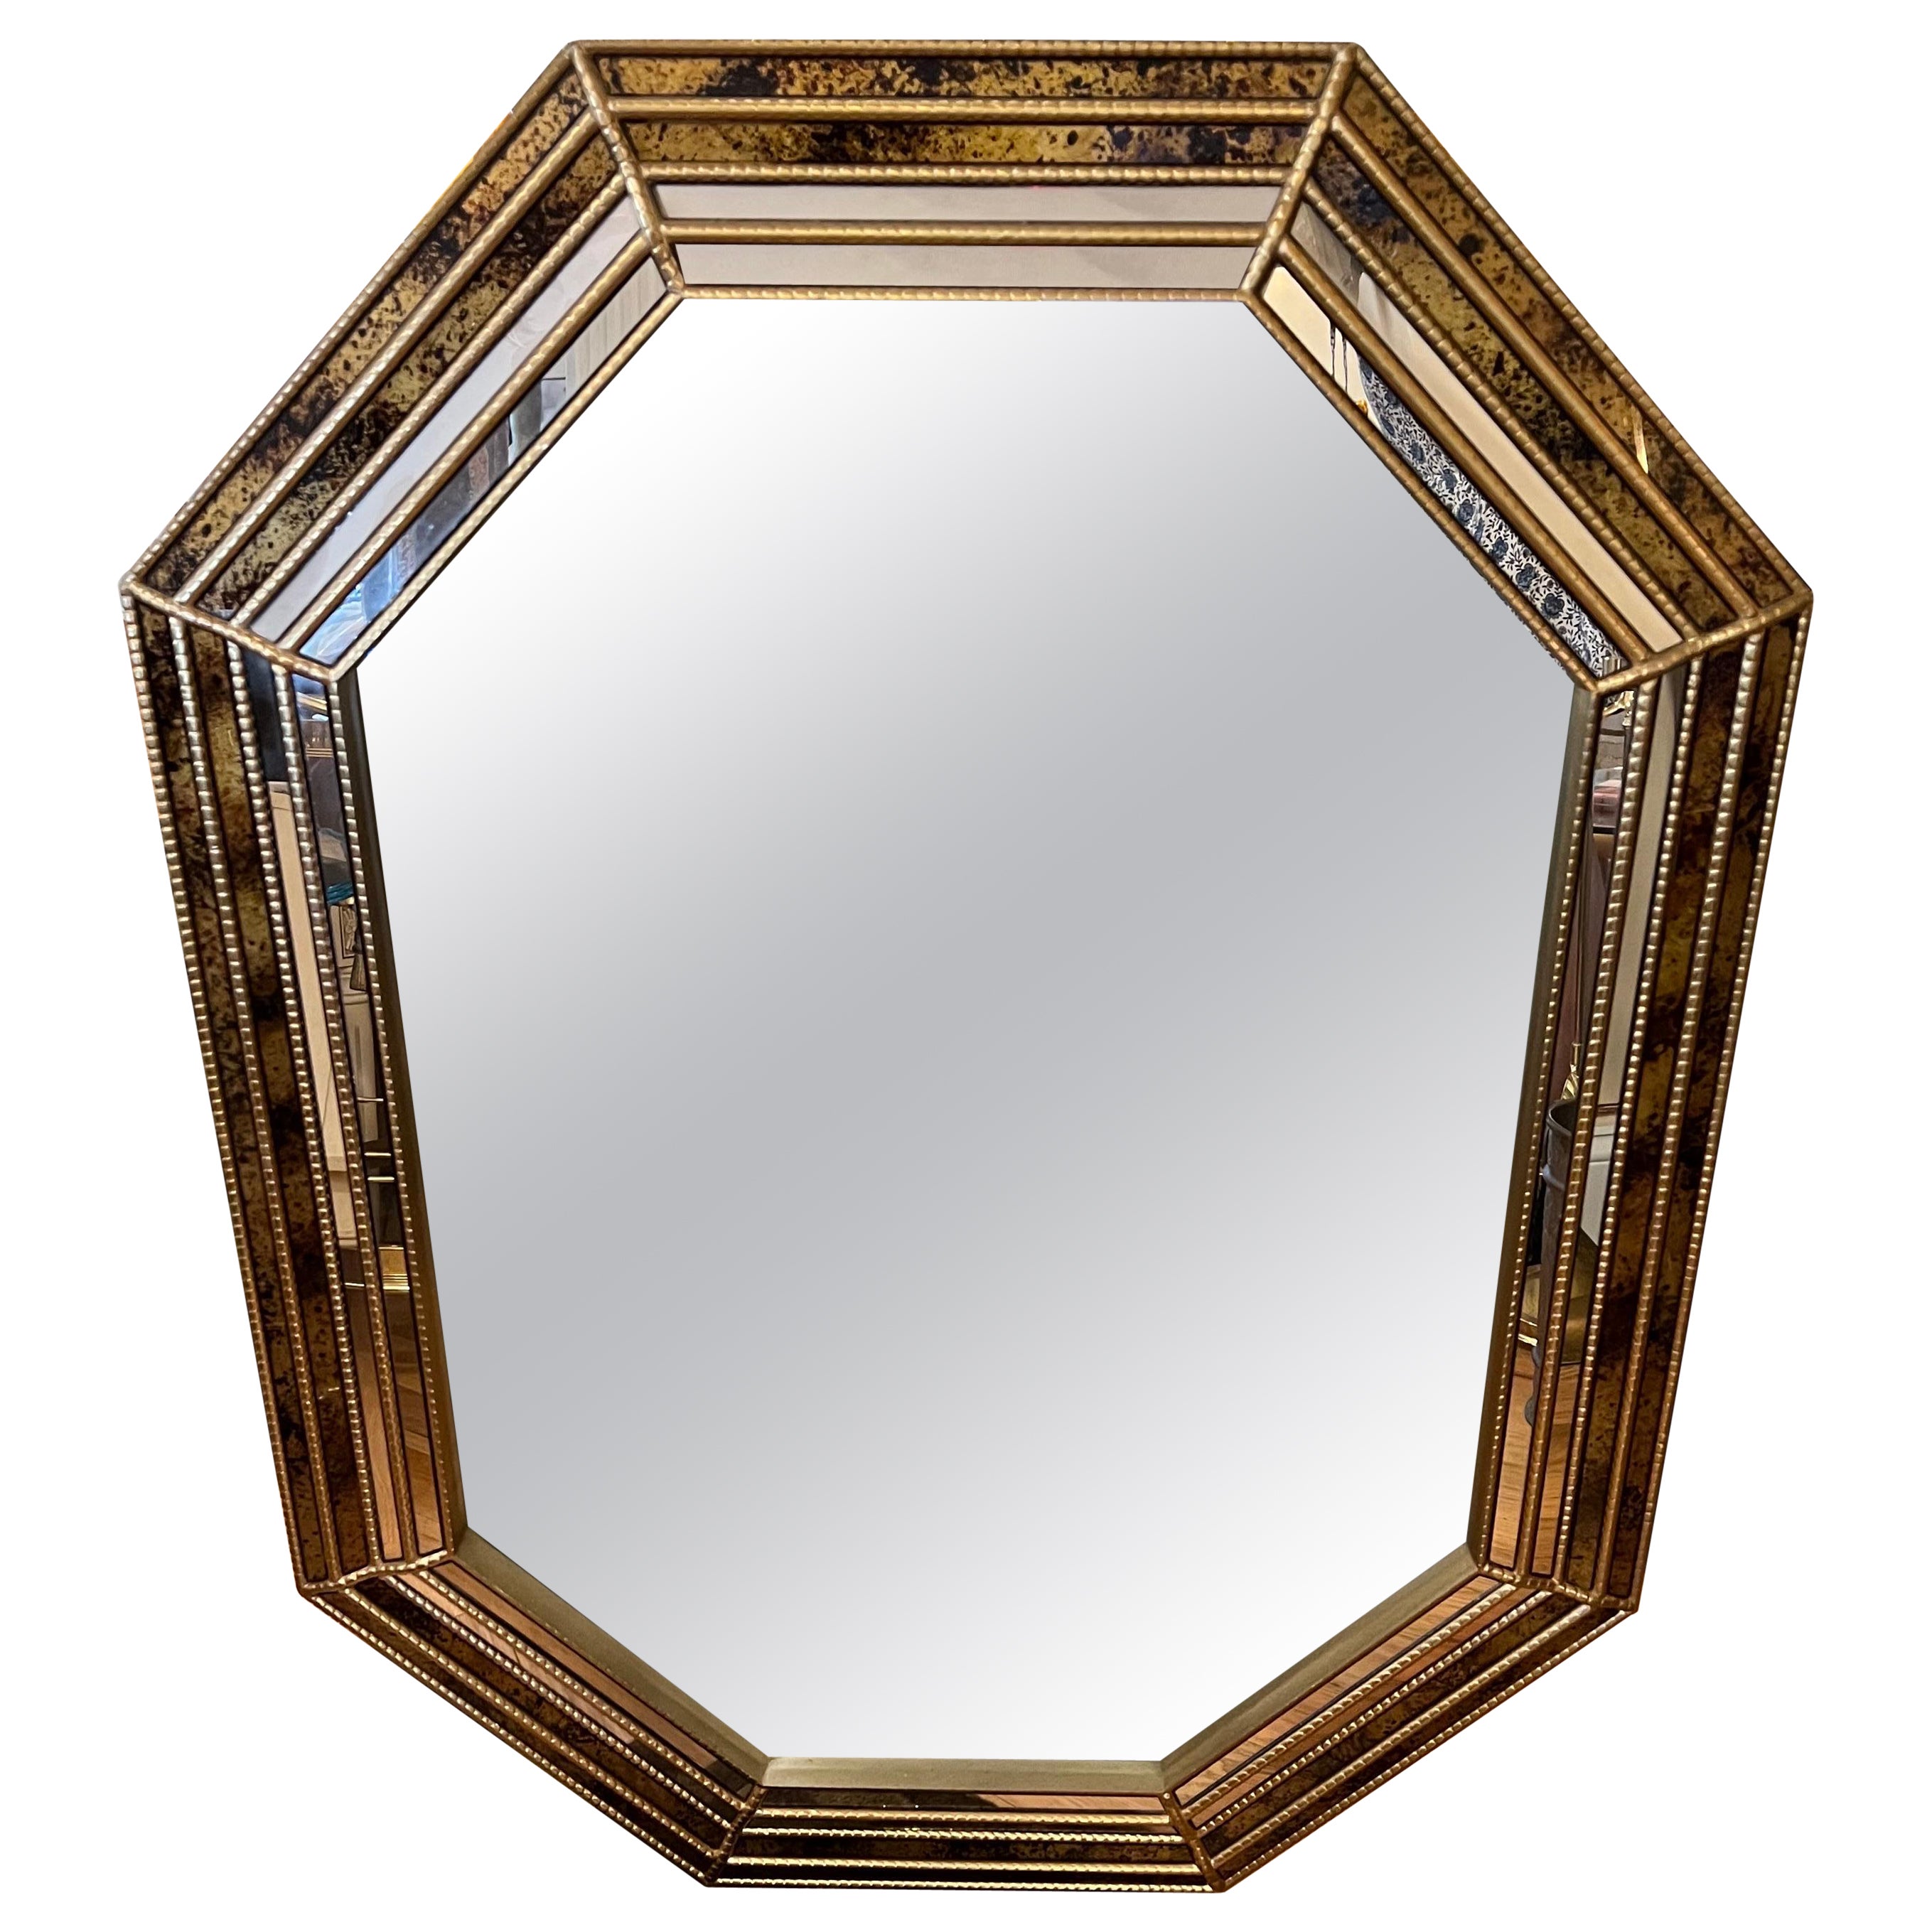 Octagonal Tortoiseshell Mirror Attributed to Labarge